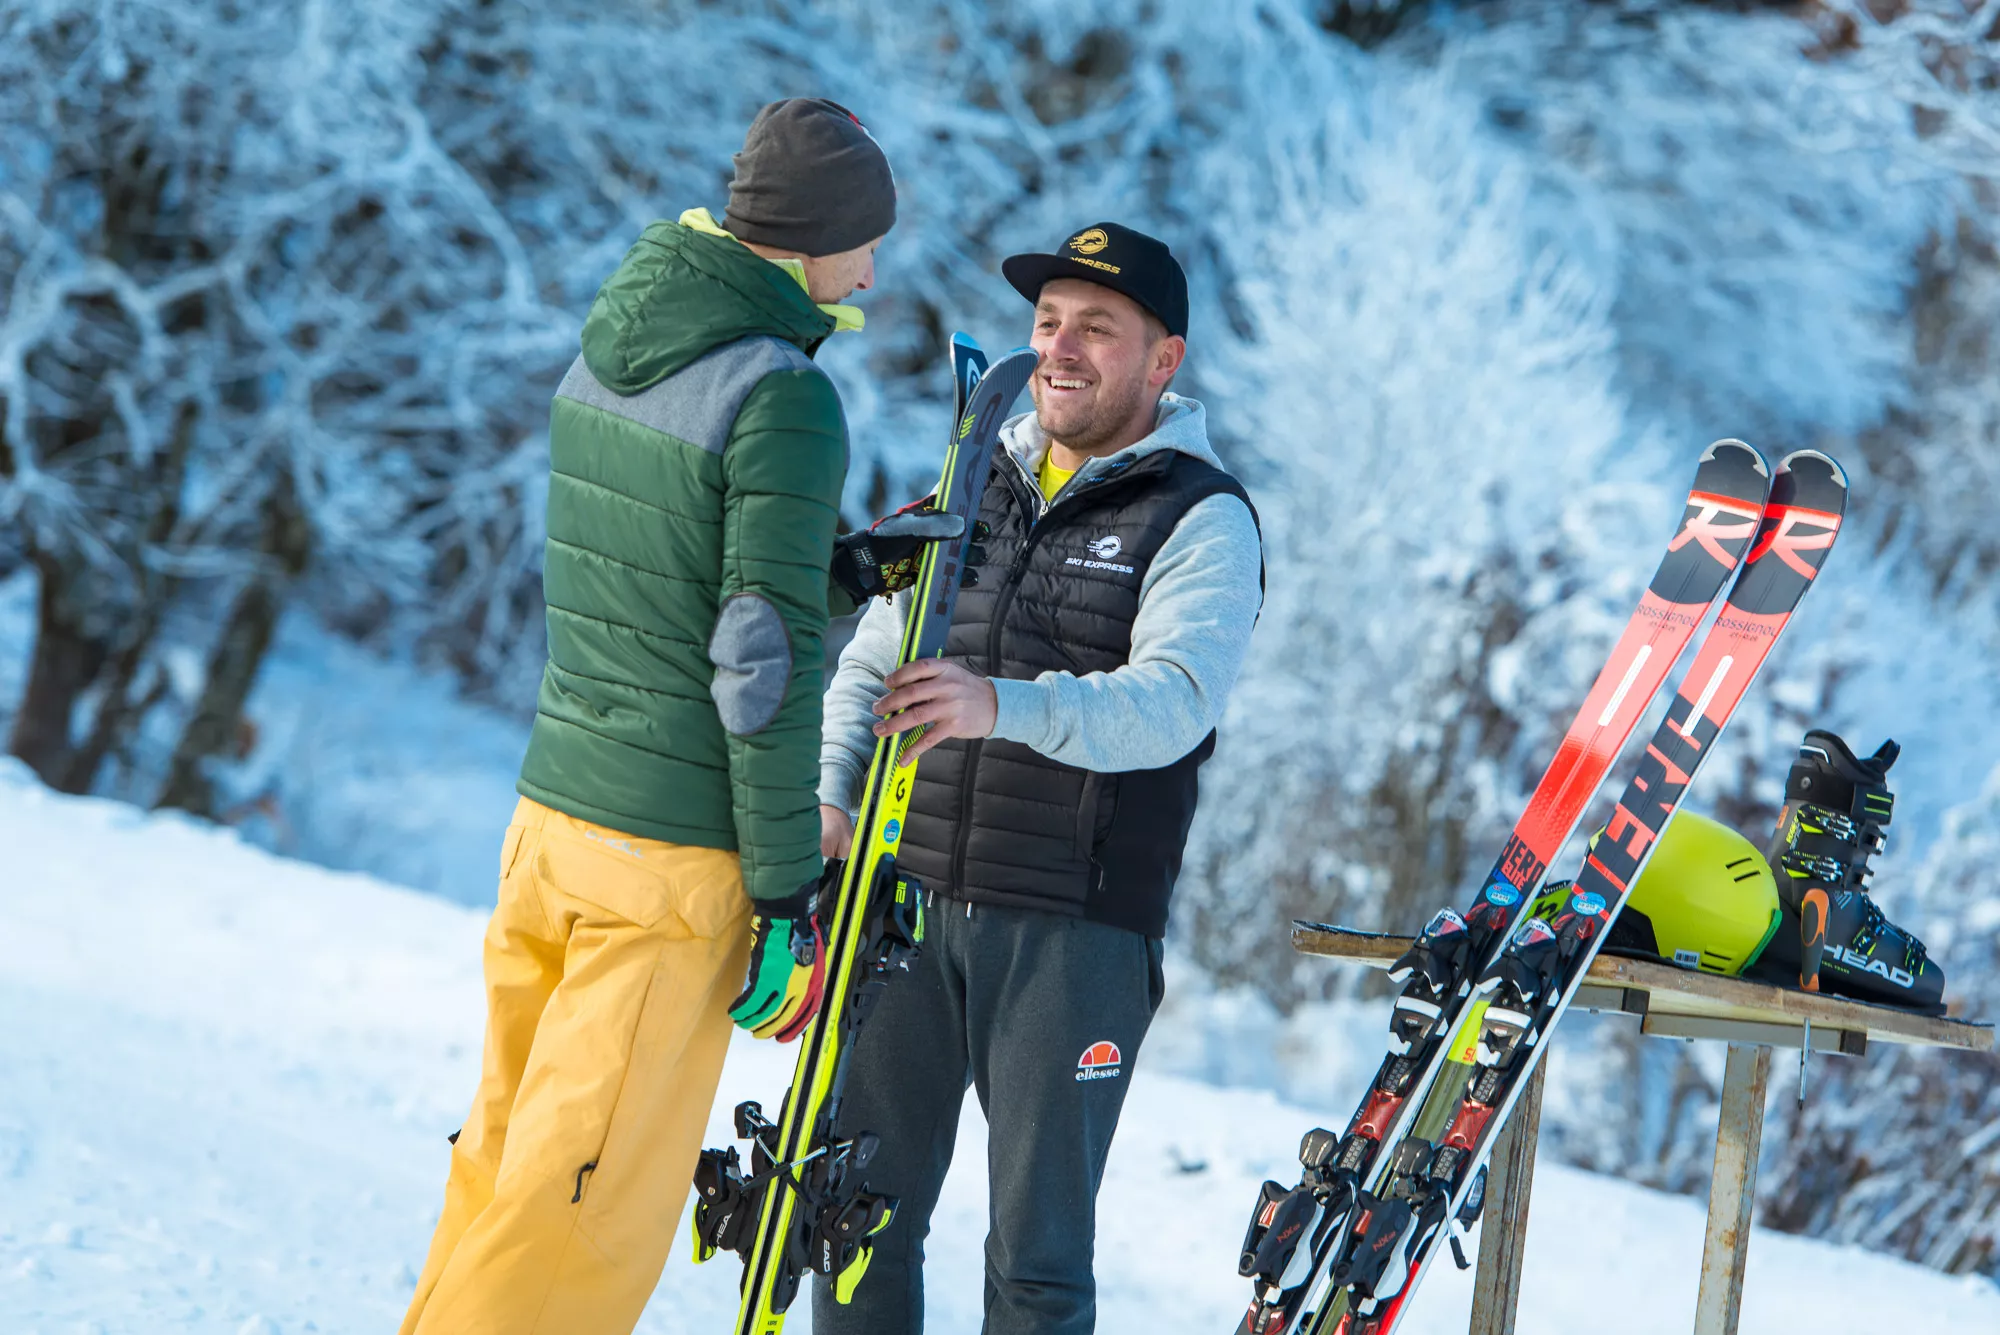 Manni Ski Rental in Austria, Europe | Snowboarding,Skiing - Rated 0.8